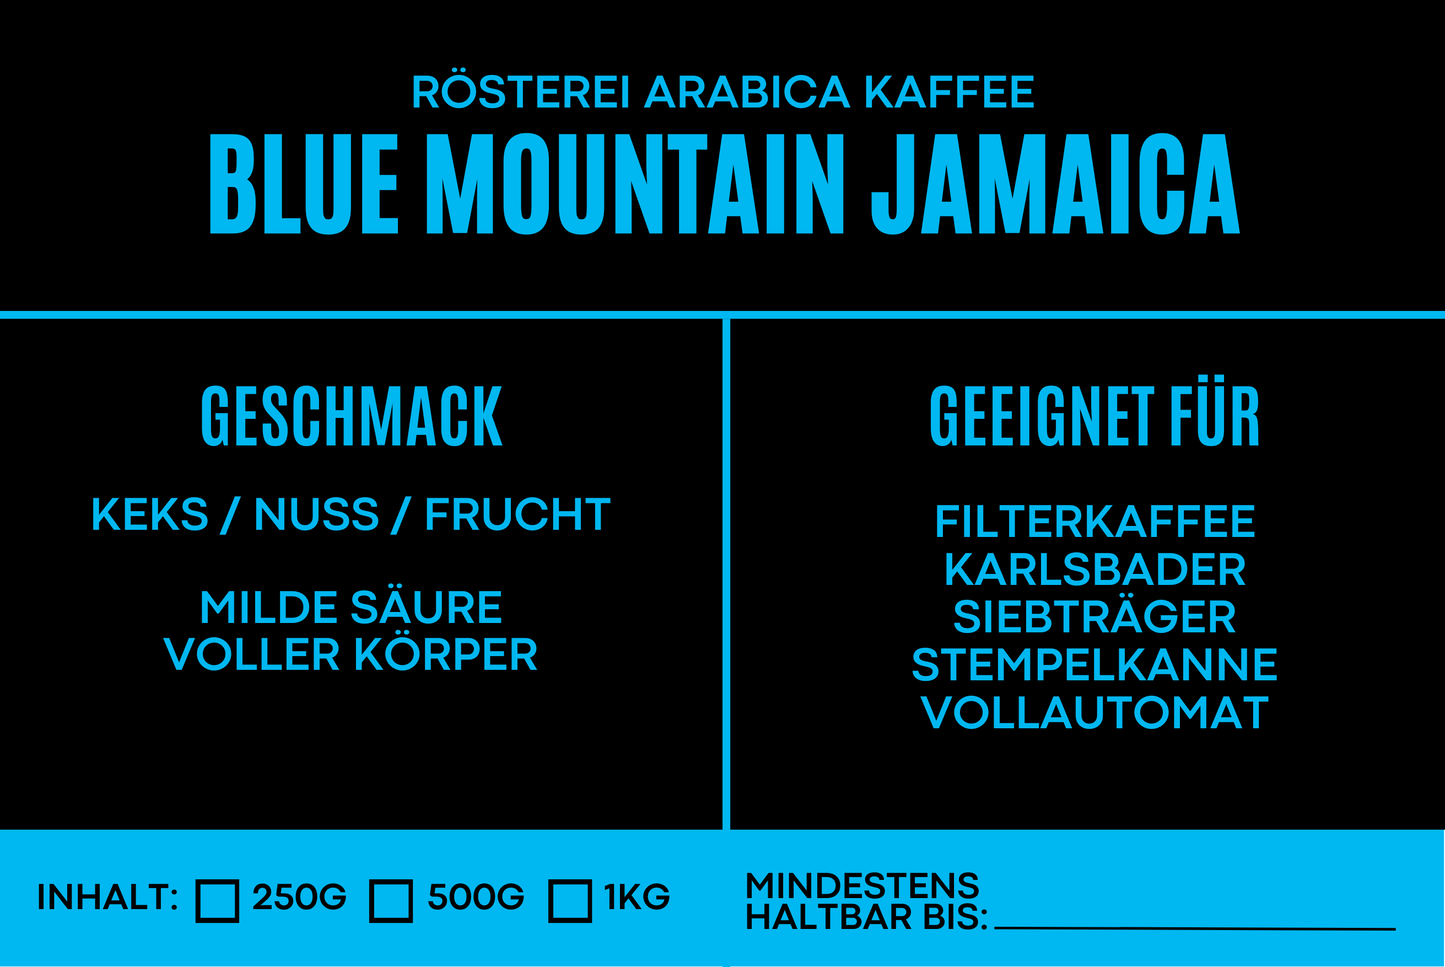 Jamaica Blue Mountain Premium Kaffee